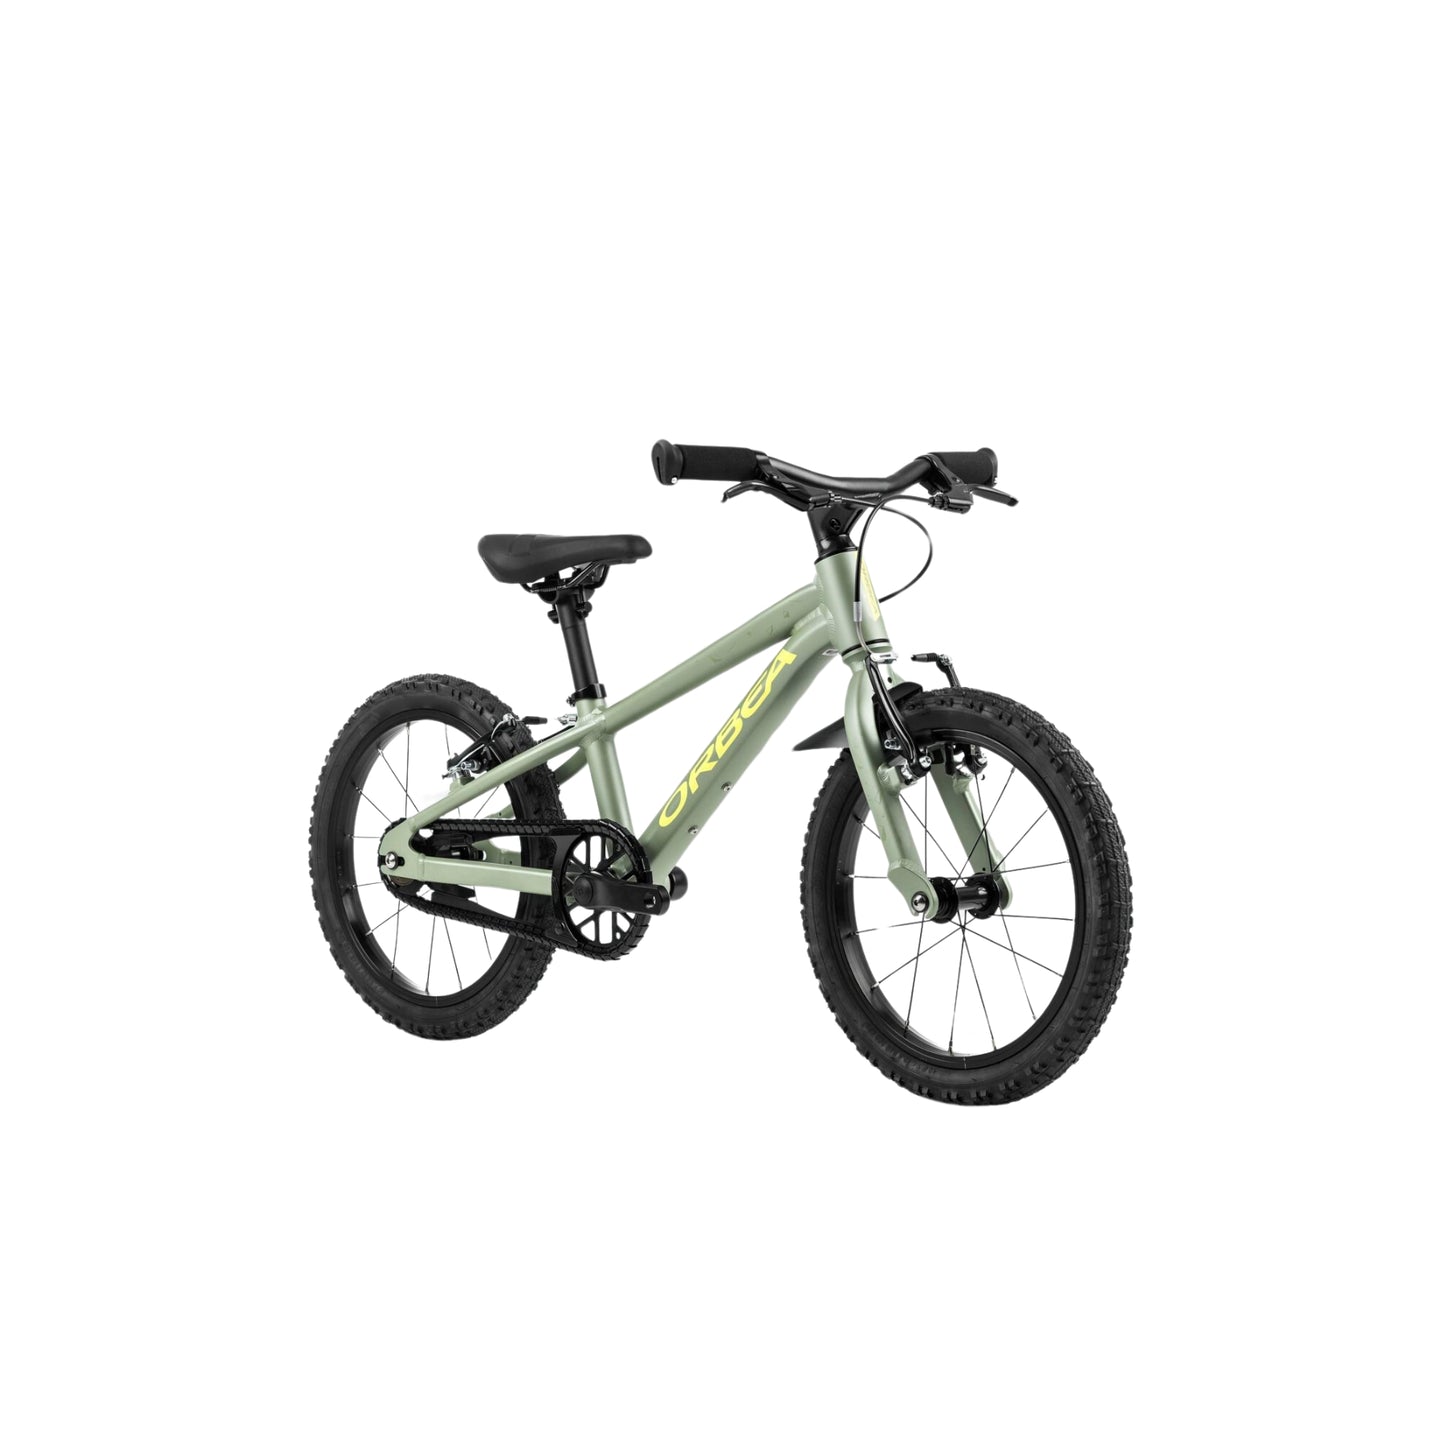 Bicicleta Orbea Mx 16 Metallic Green Artichoke